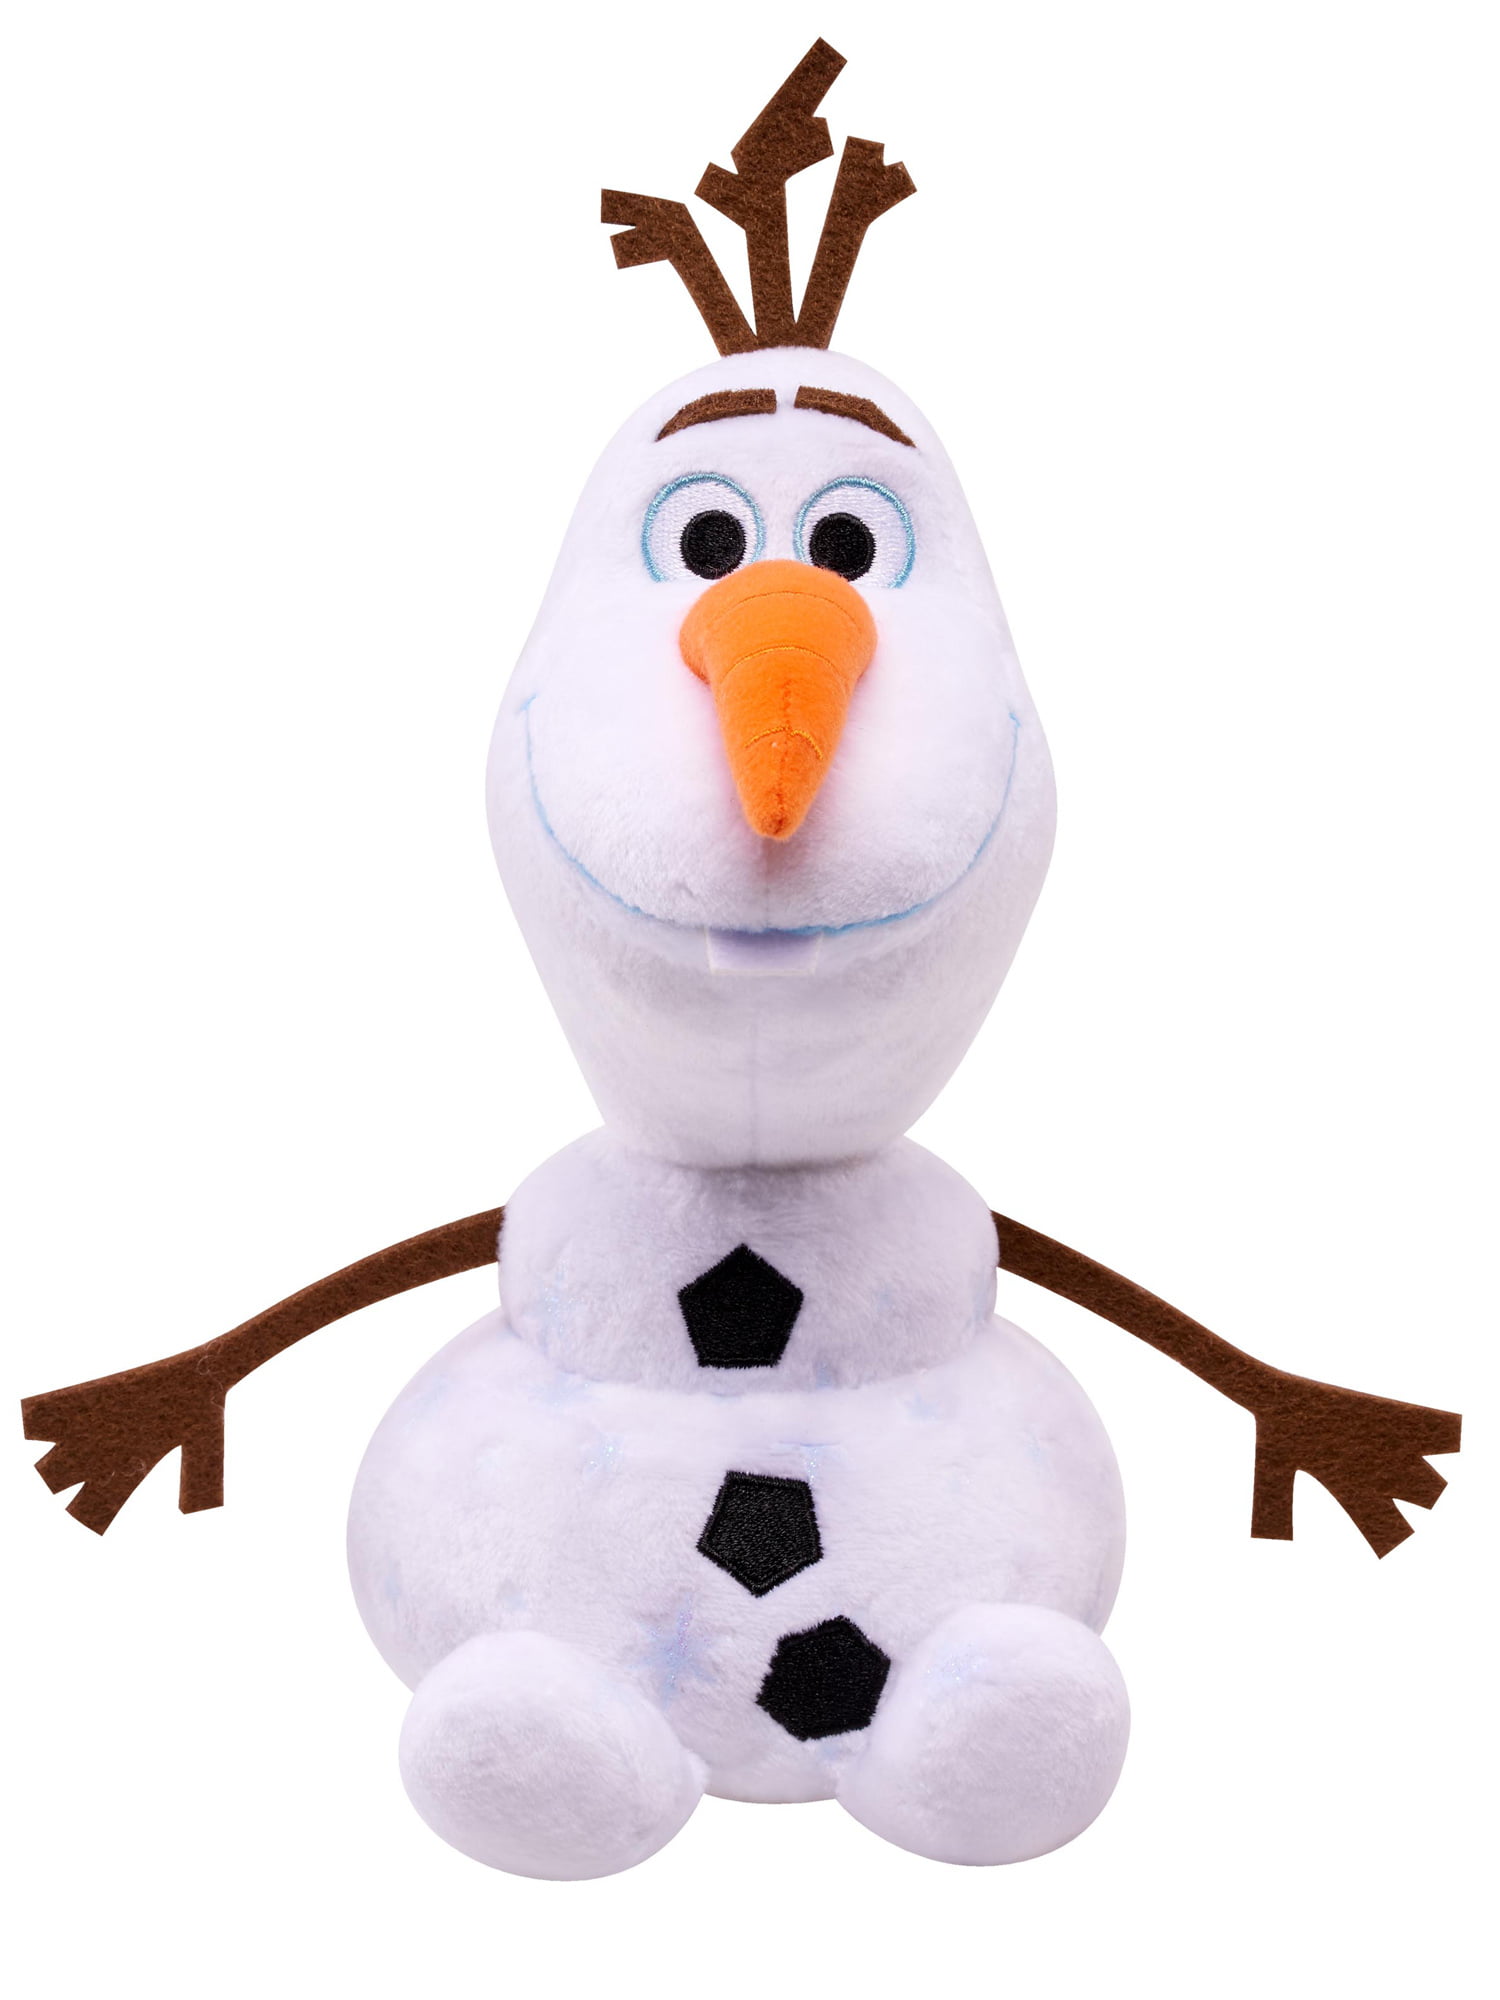 Disney FROZEN Olaf Snowman Large Plush Stuffed Animal Pillow Toy Doll NEW 24"